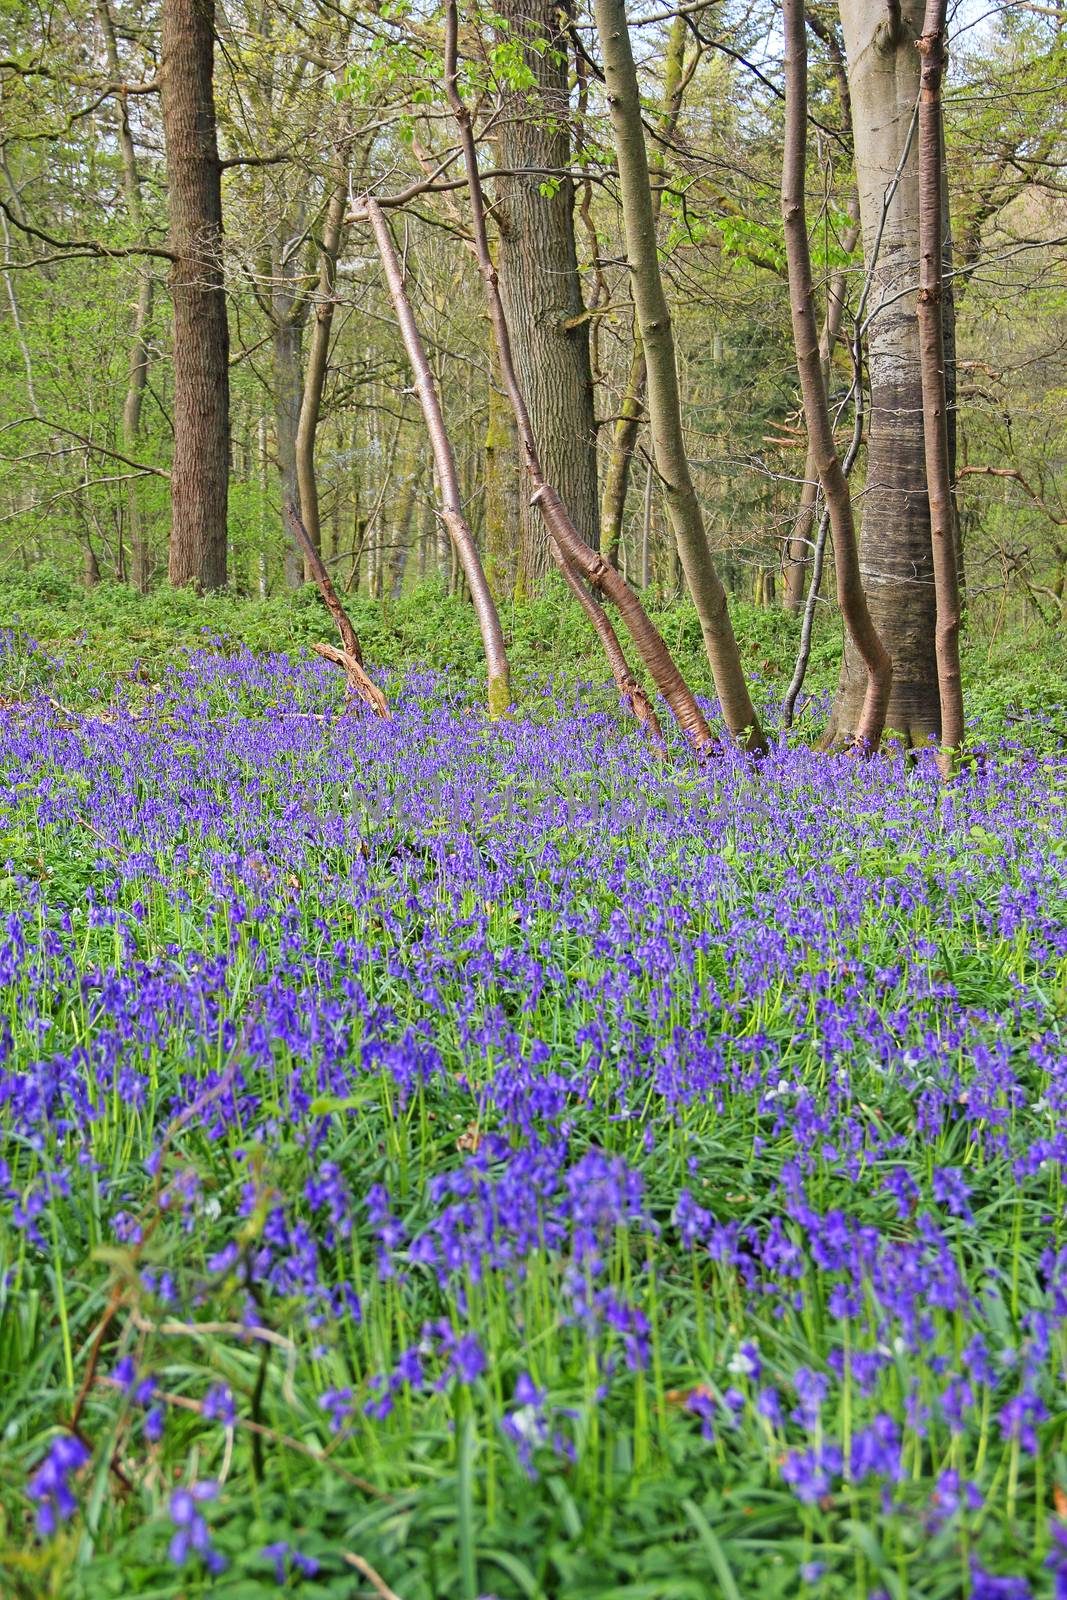 Bluebell flowers in spring forest by destillat